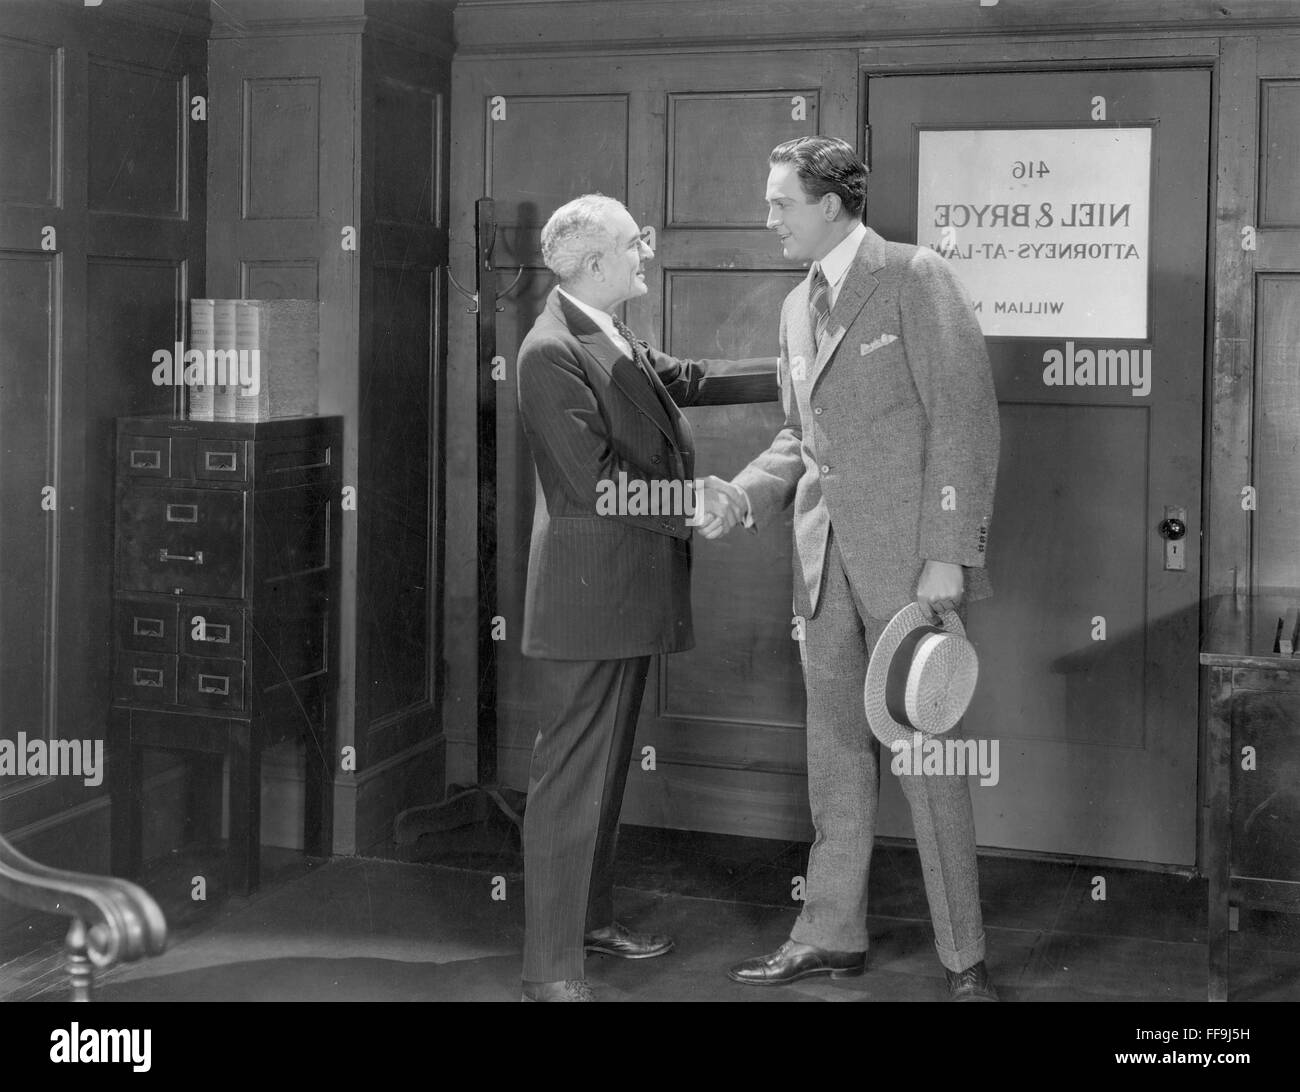 OFFICE MEETING, 1920s. /nA silent movie still, 1920s. Stock Photo